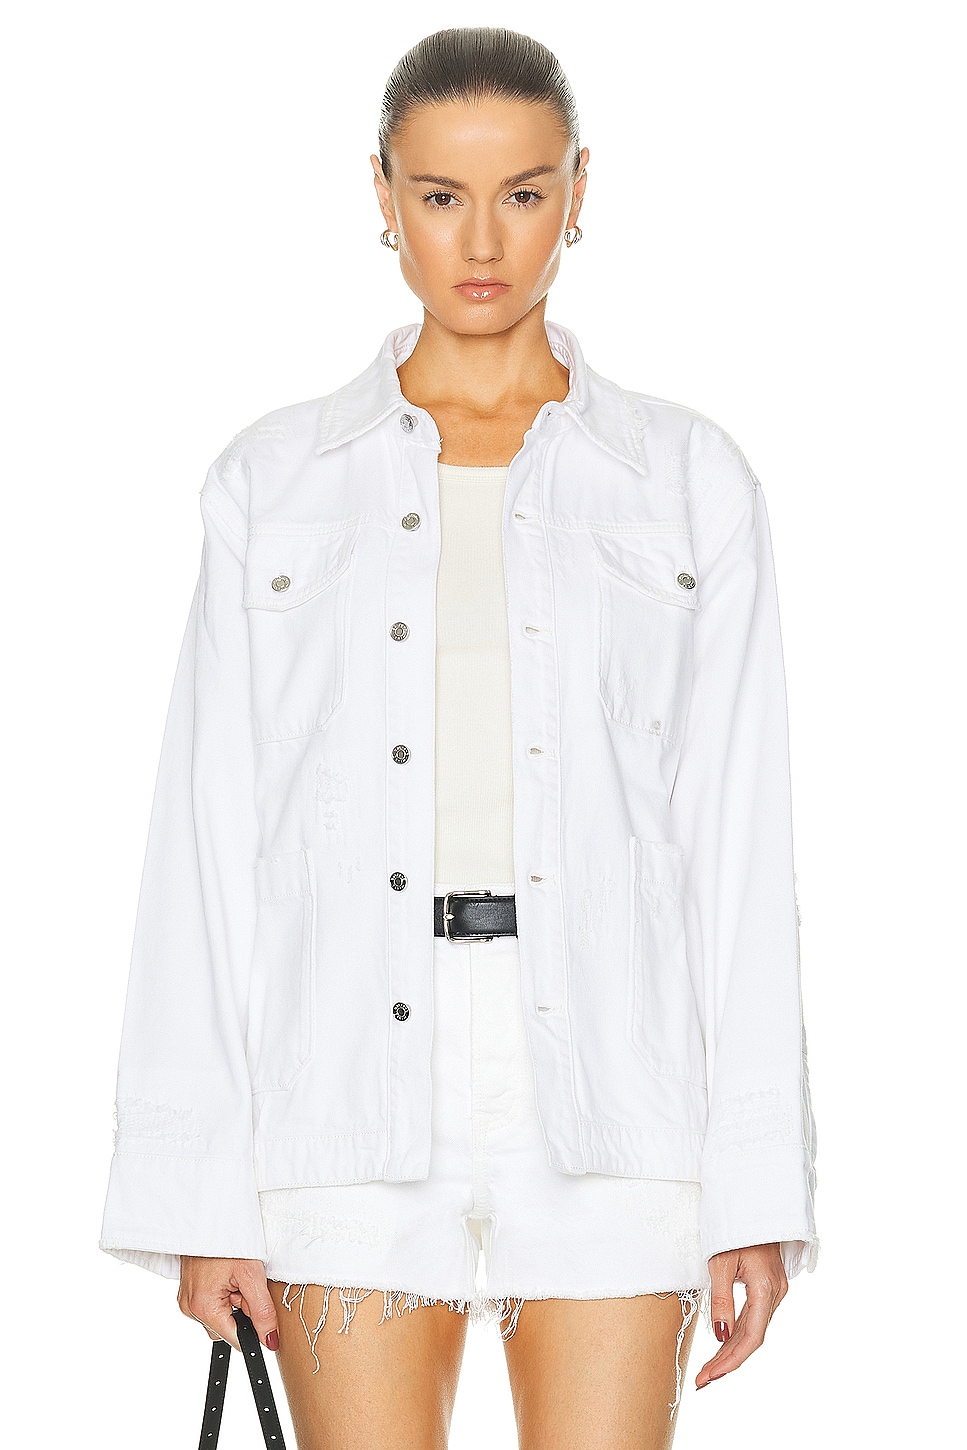 Image 1 of GRLFRND Jessie Body Drill Shirt Jacket in White Rip